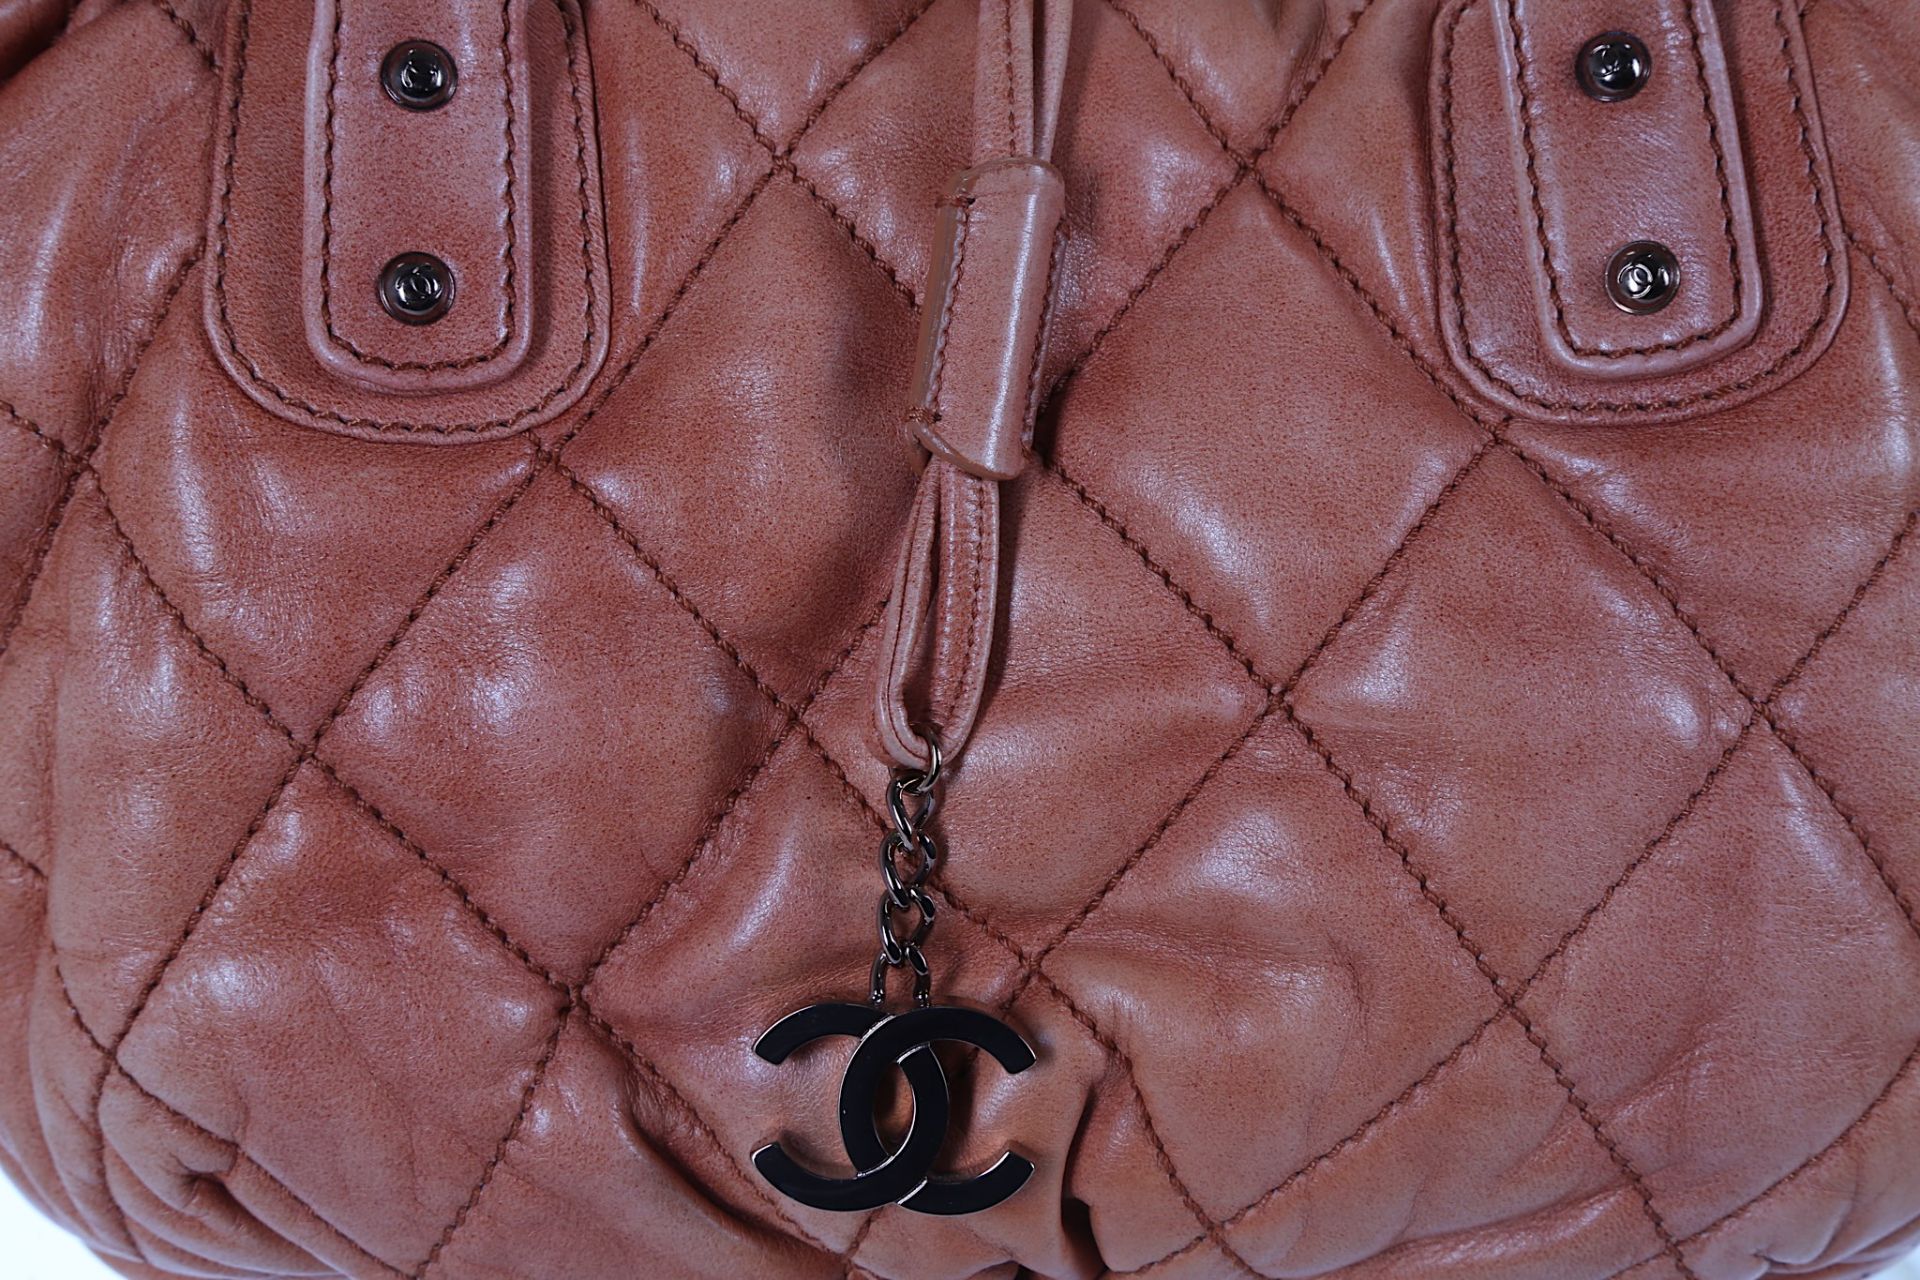 Chanel Coral Leather Shoulder Bag, c. 2005-06, puf - Image 2 of 7